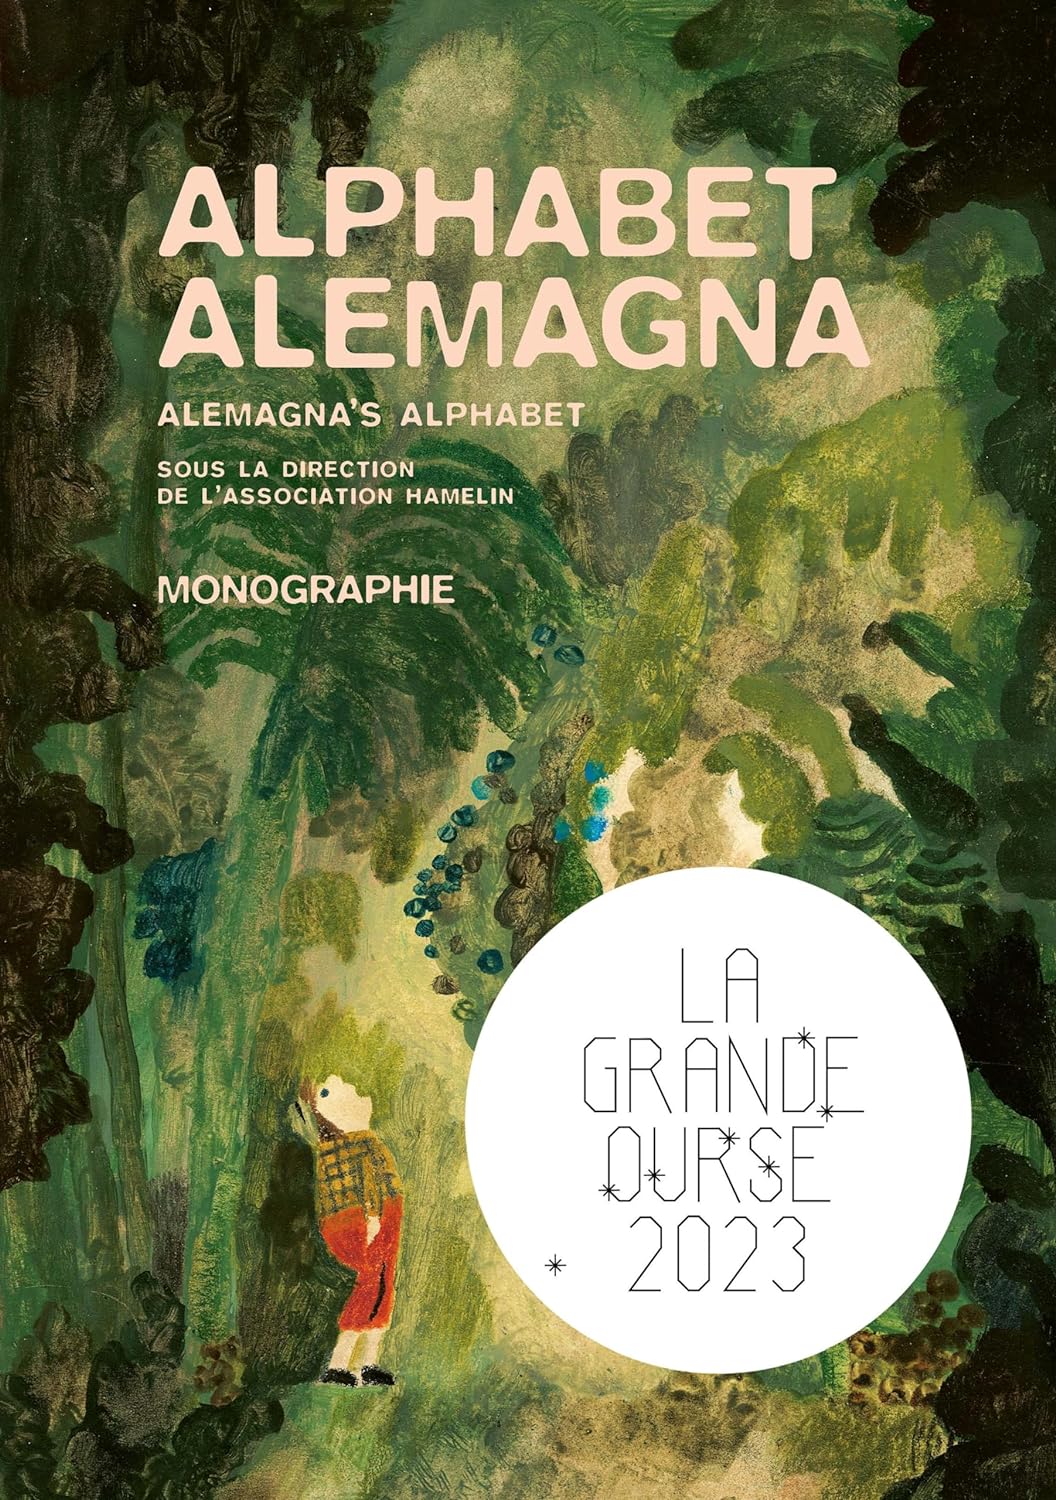 Alphabet Alemagna: Monographie